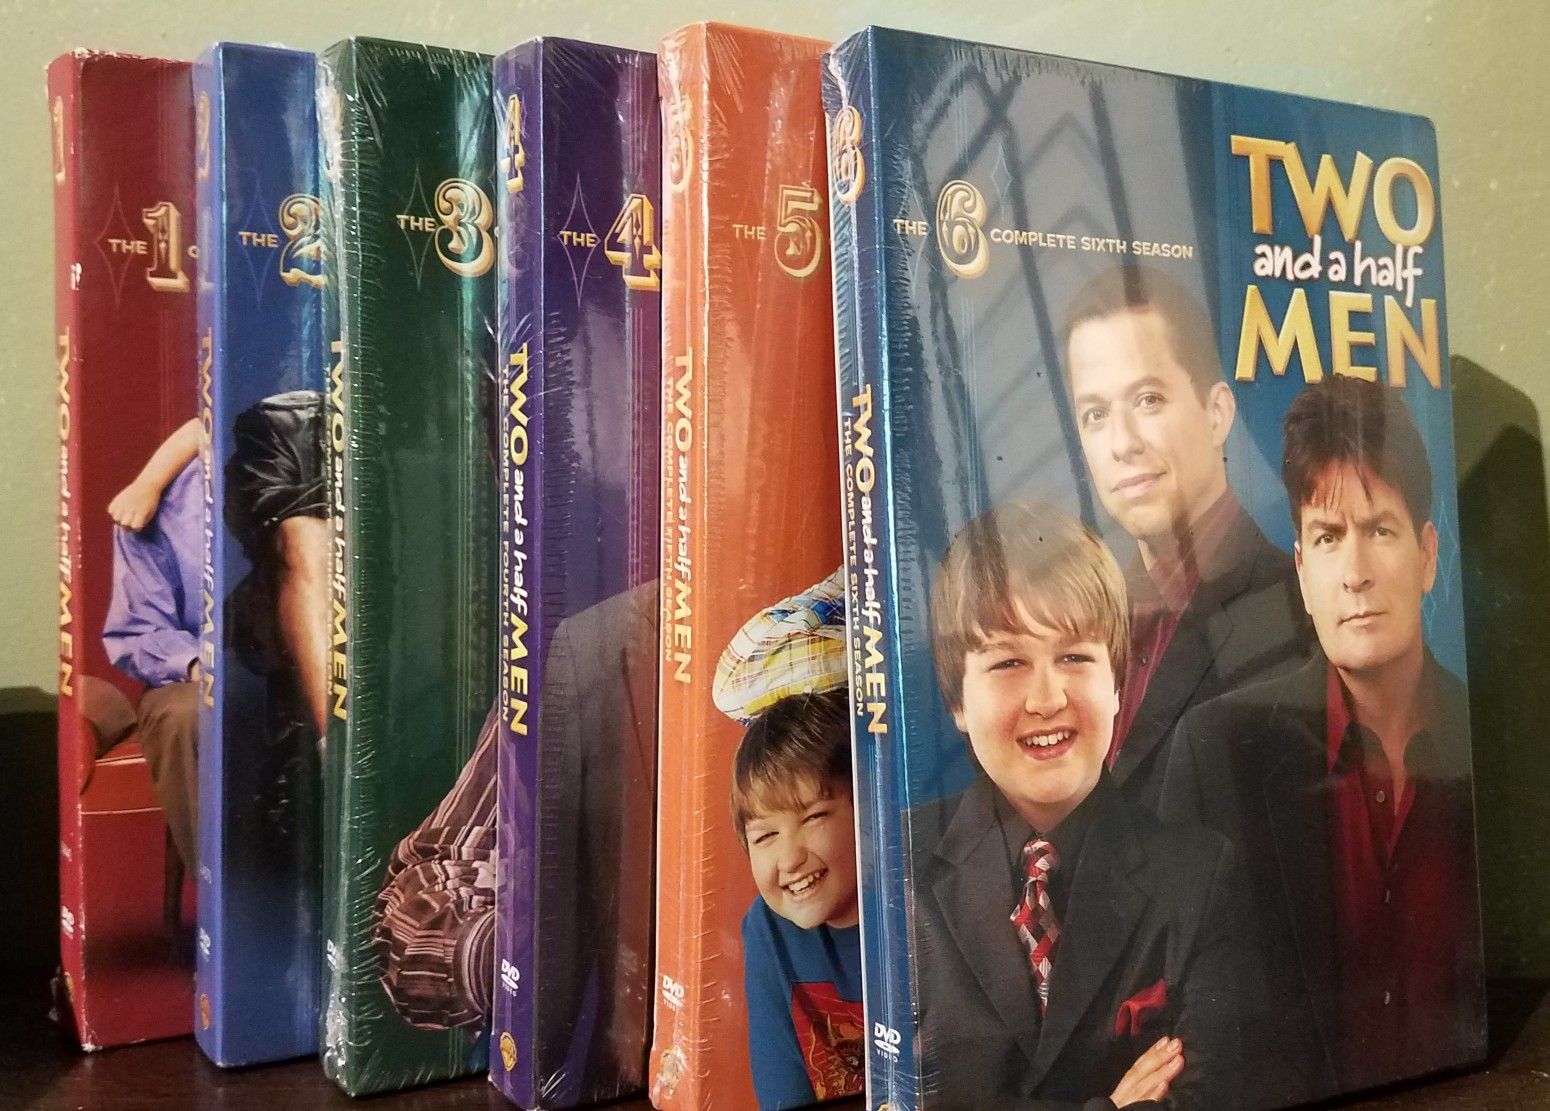 DVD Set "Two and a Half Men" Seasons 1-6